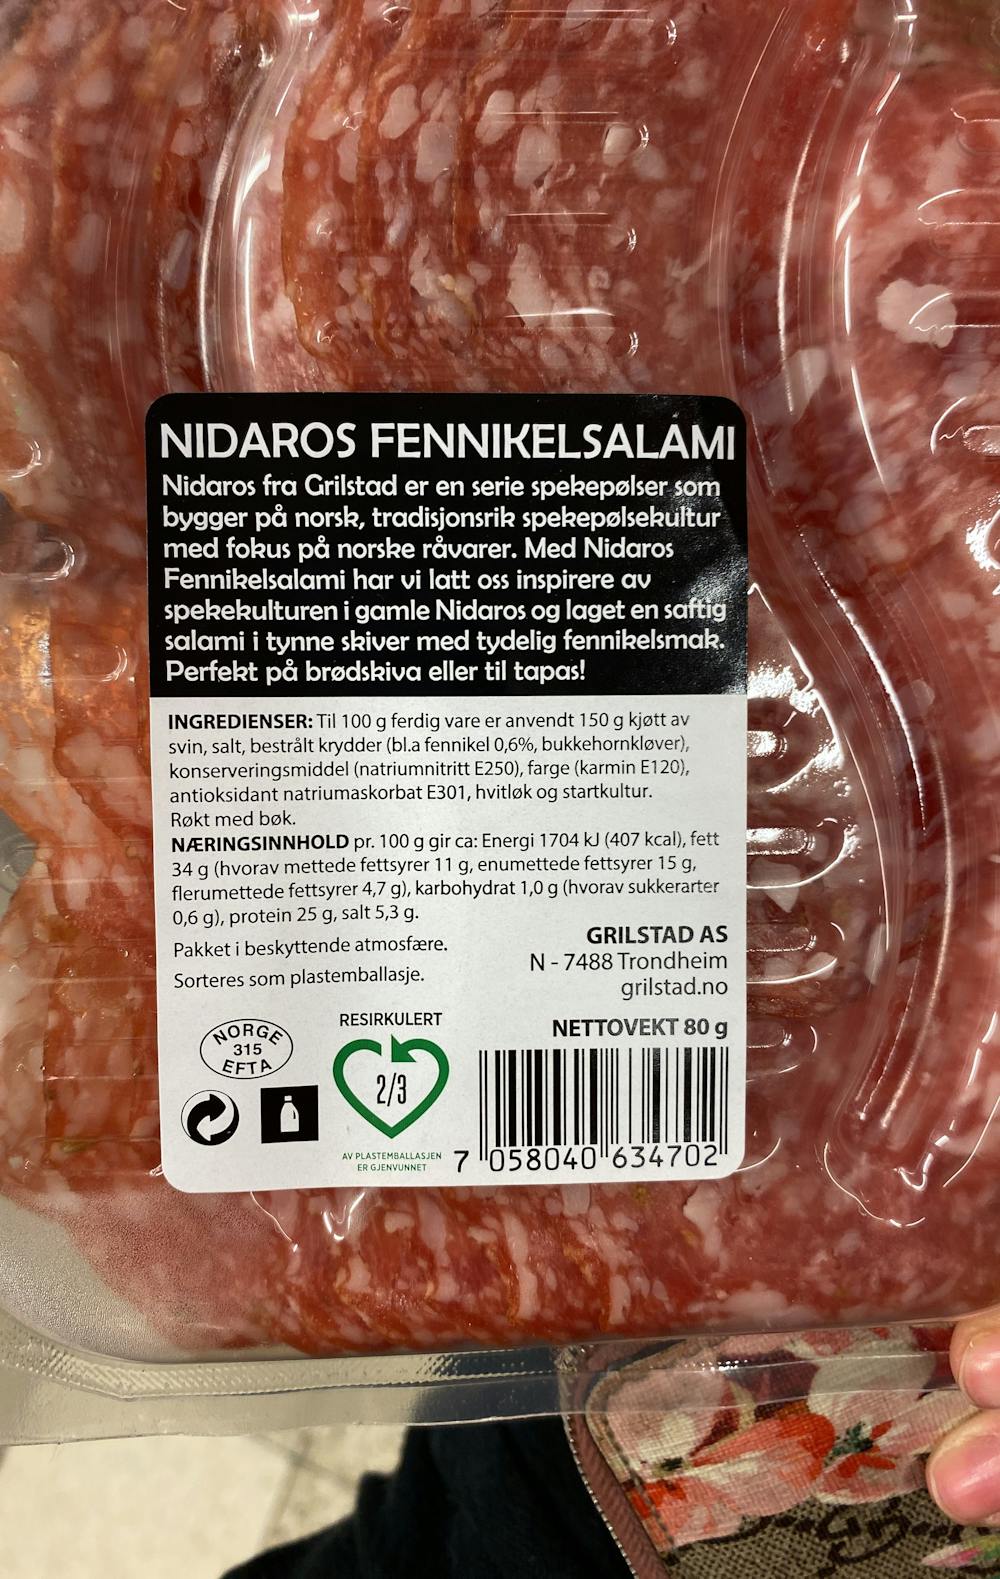 Ingredienslisten til Nidaros fenikkel salami, Grilstad